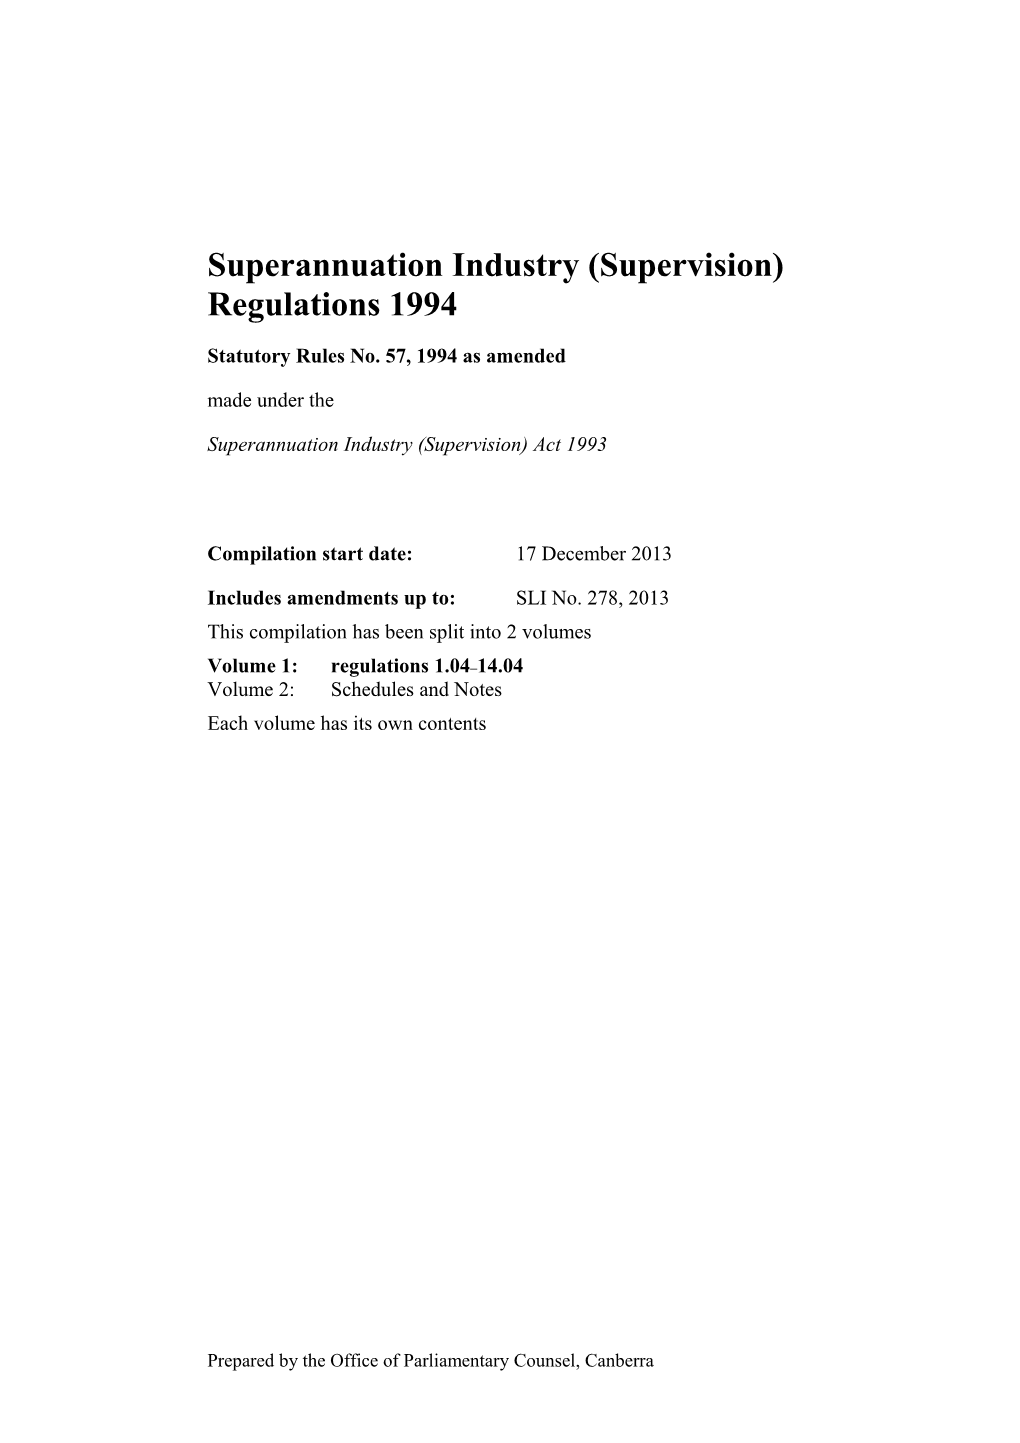 Superannuation Industry (Supervision) Regulations 1994